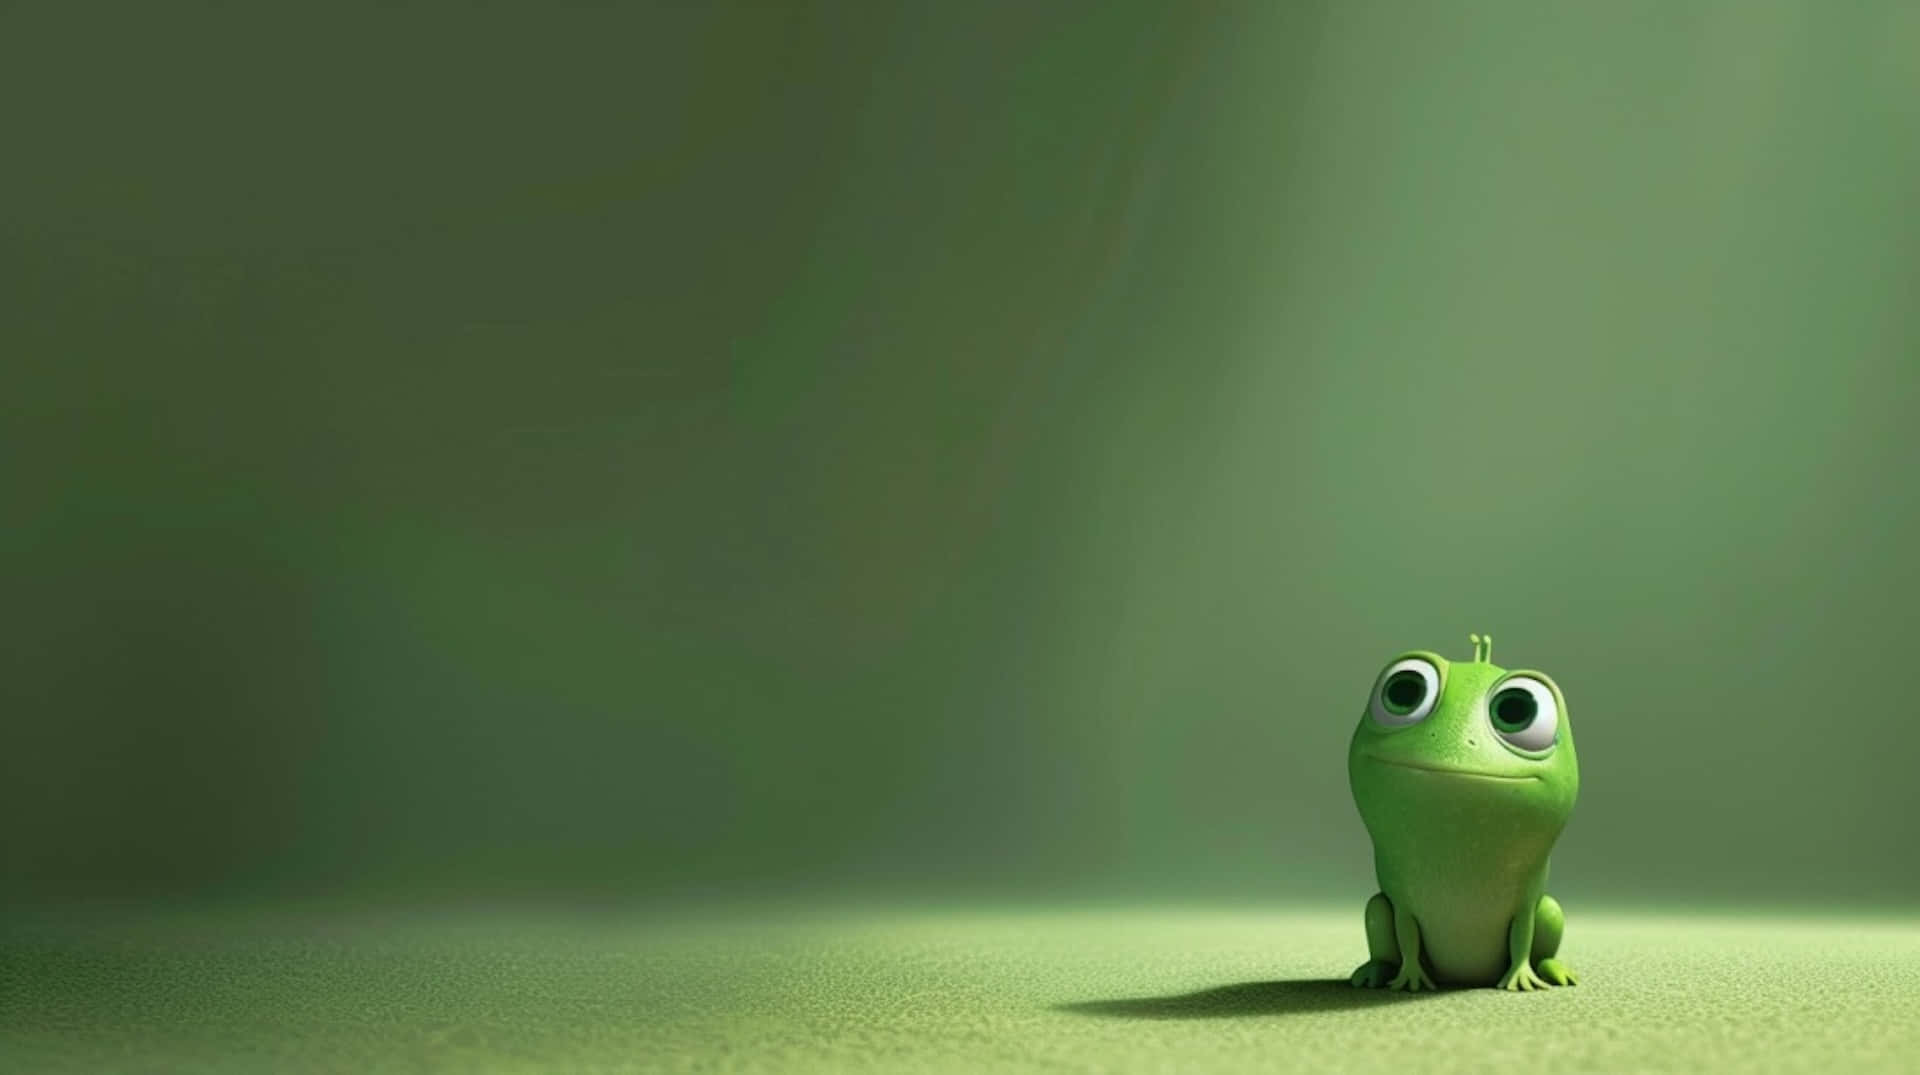 Green Frog Cartoon Character Wallpaper Wallpaper